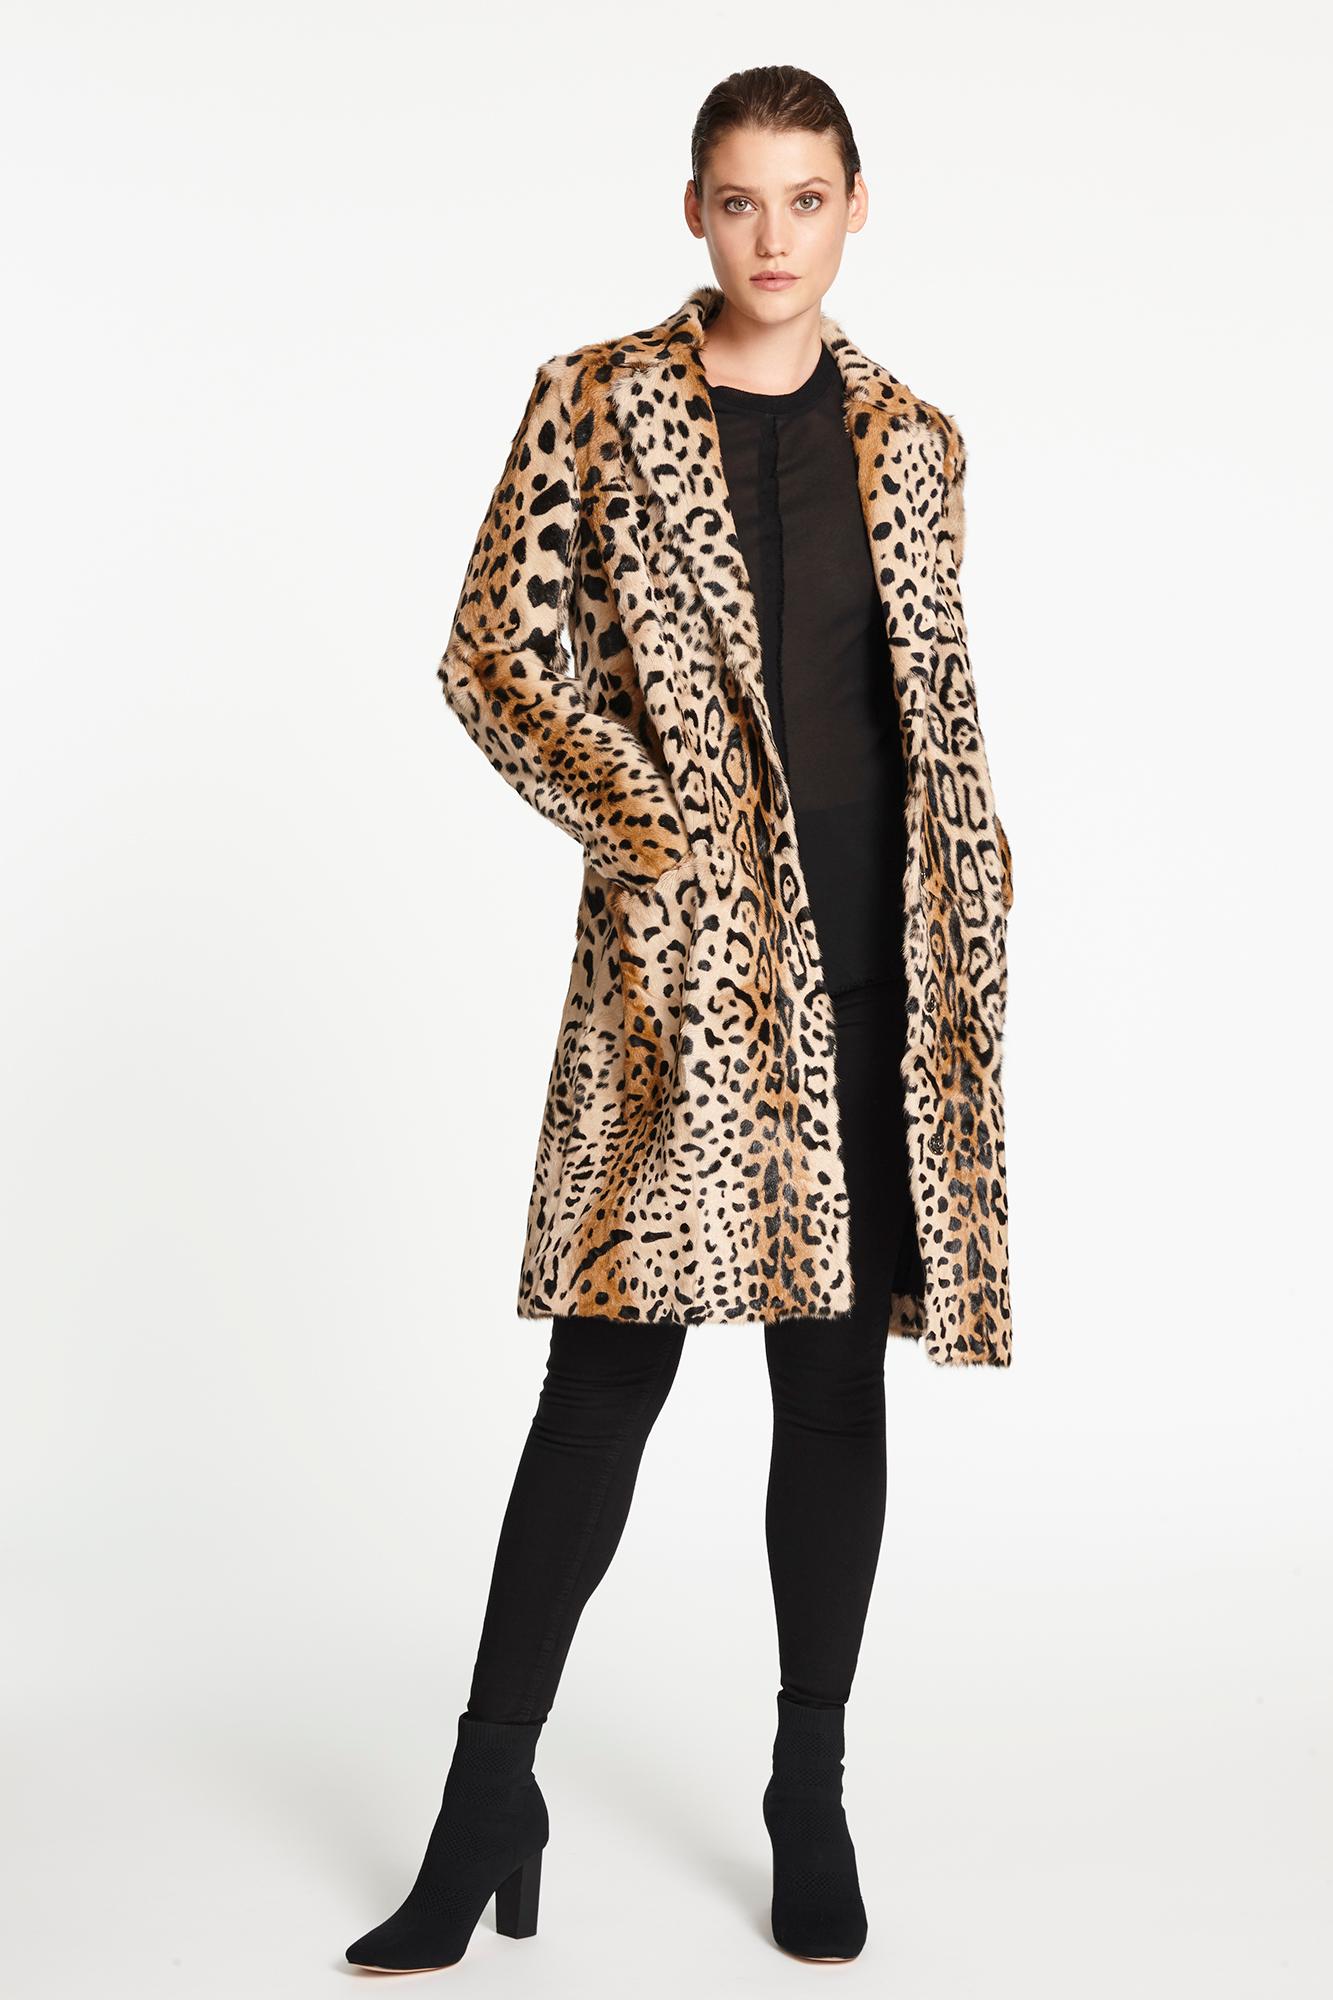 Women's Verheyen London Leopard Print Coat in Natural Goat Hair Fur Size 8-10